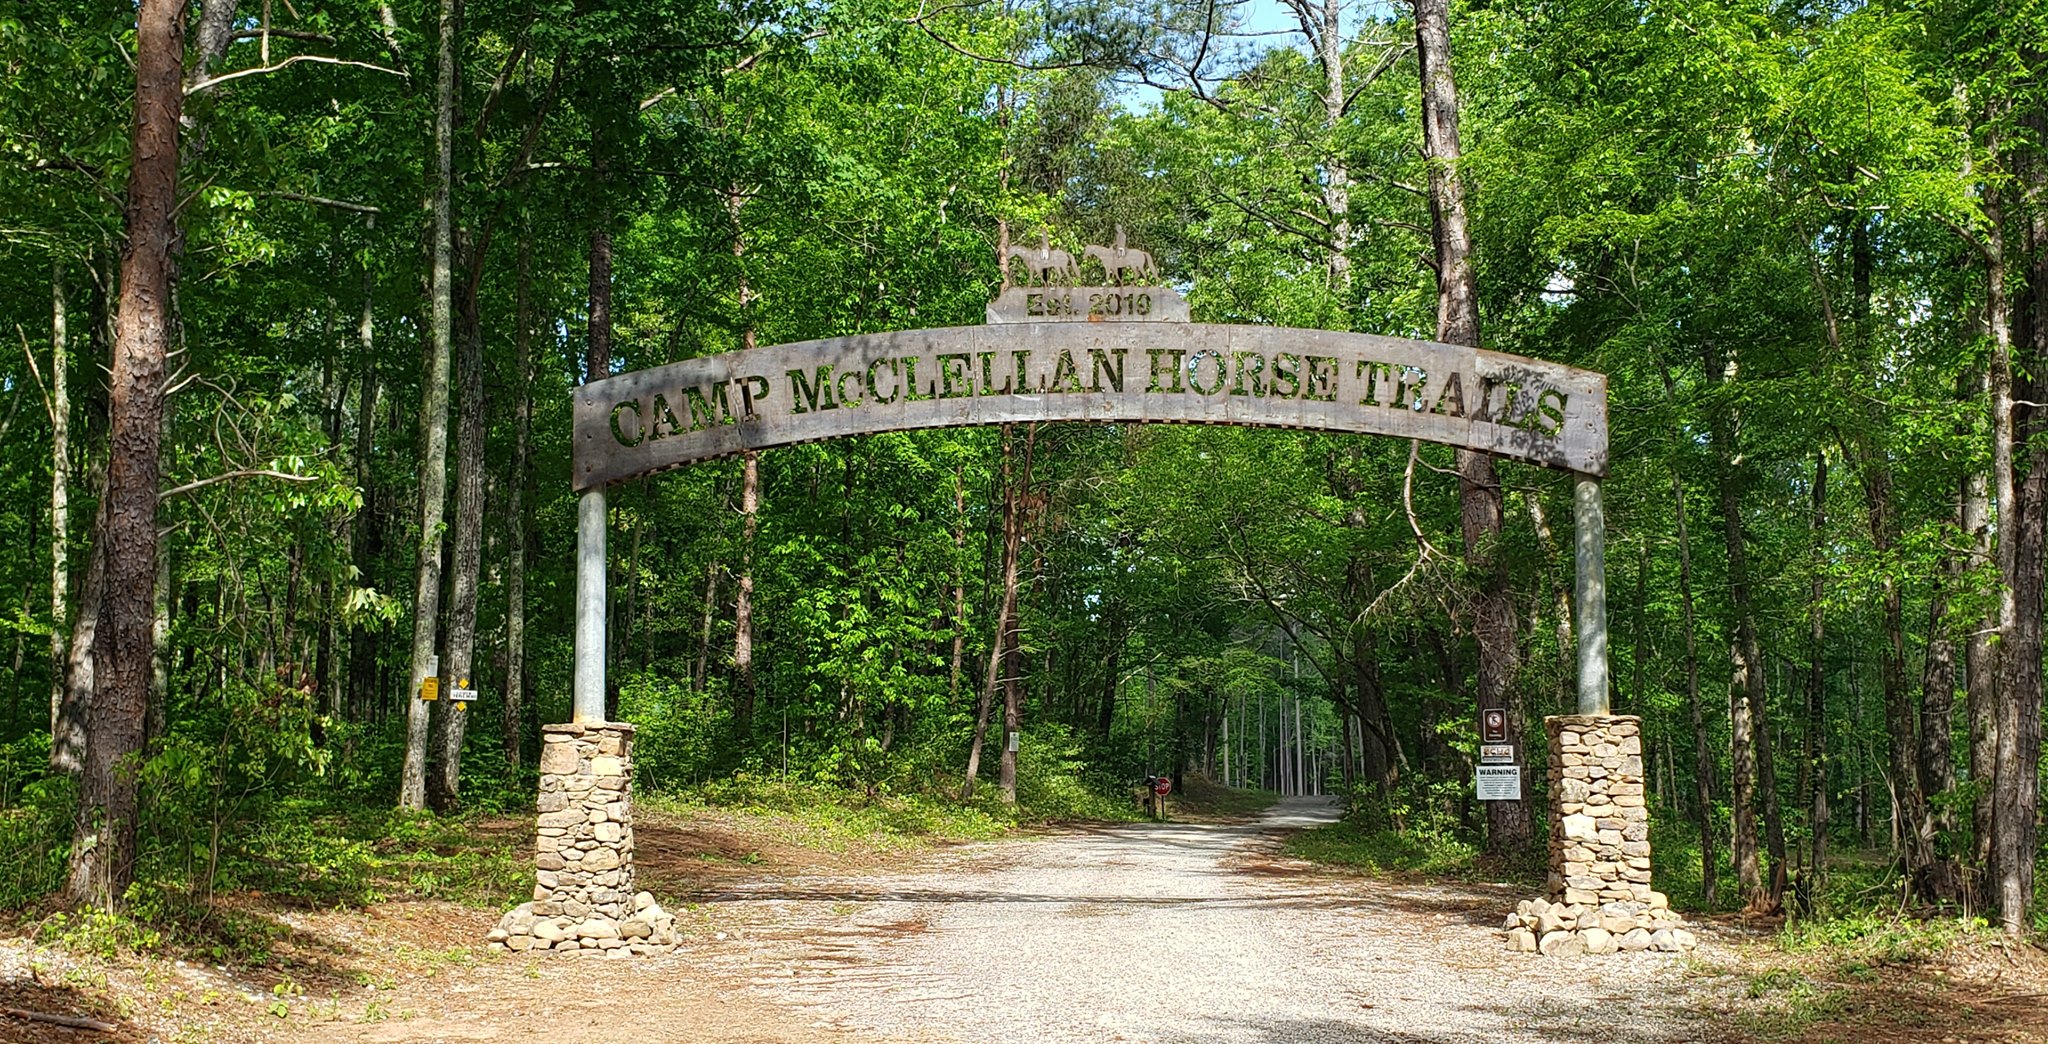 Camp McClellan Horse Trails Campground in Alabama | Top Horse Trails